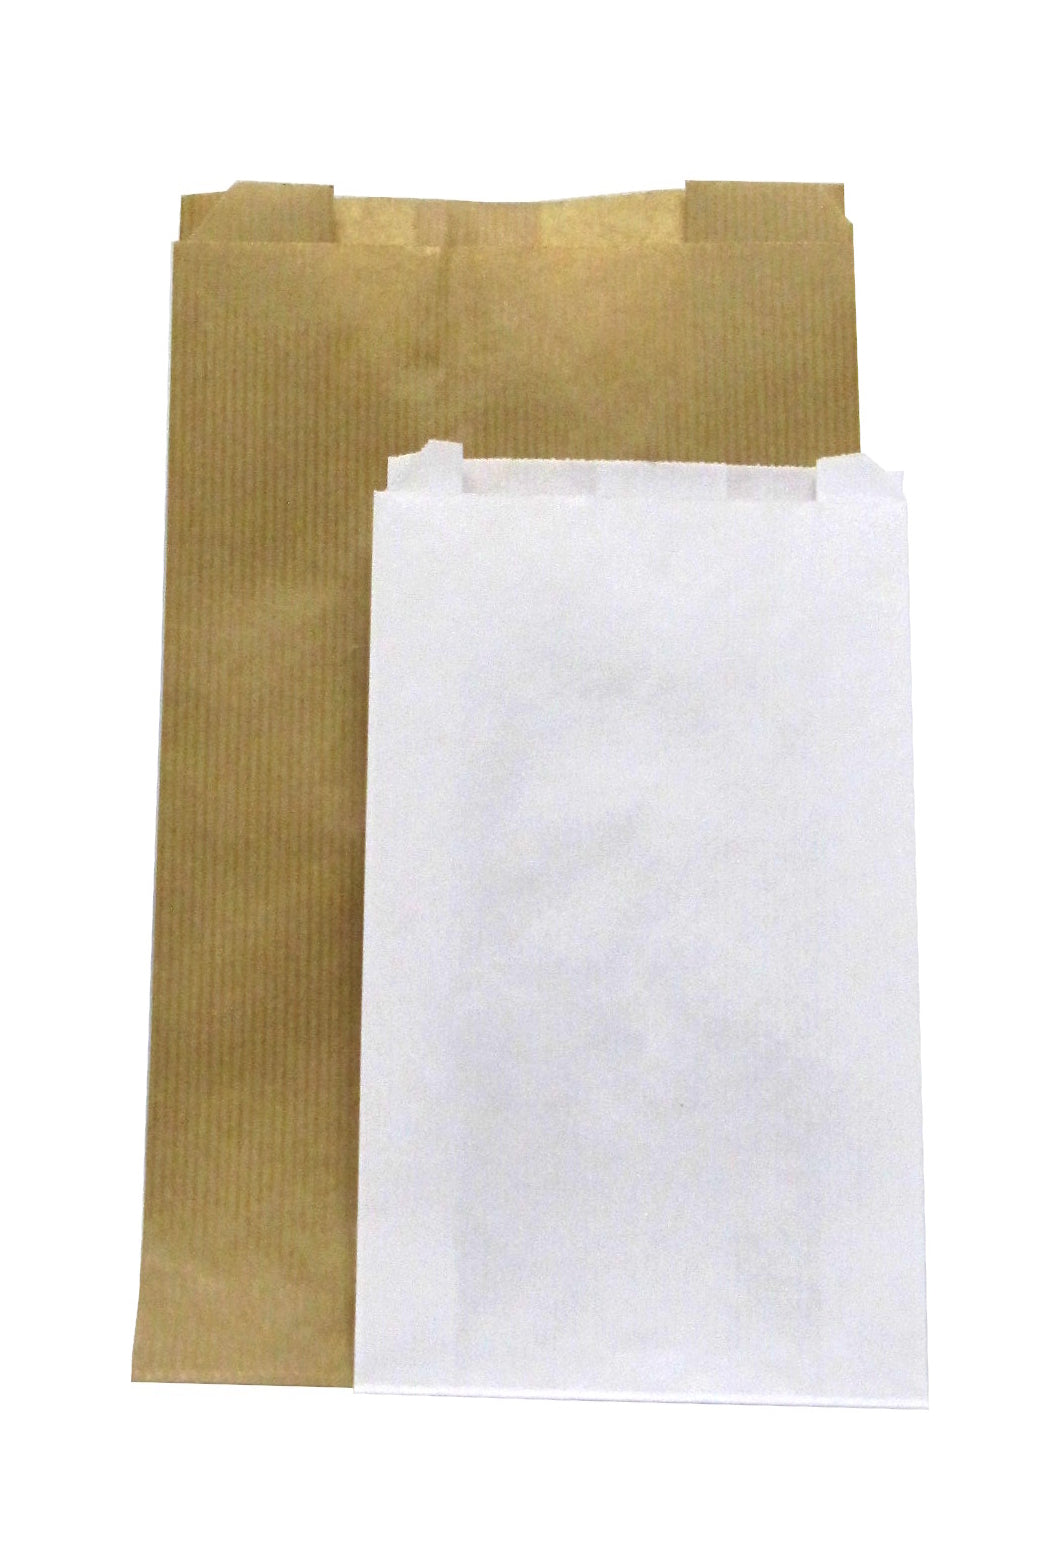 DittaDisplay PochPochette papier kraft vergé kraft paper pouch Kraftpapier-Tascheette papier kraft